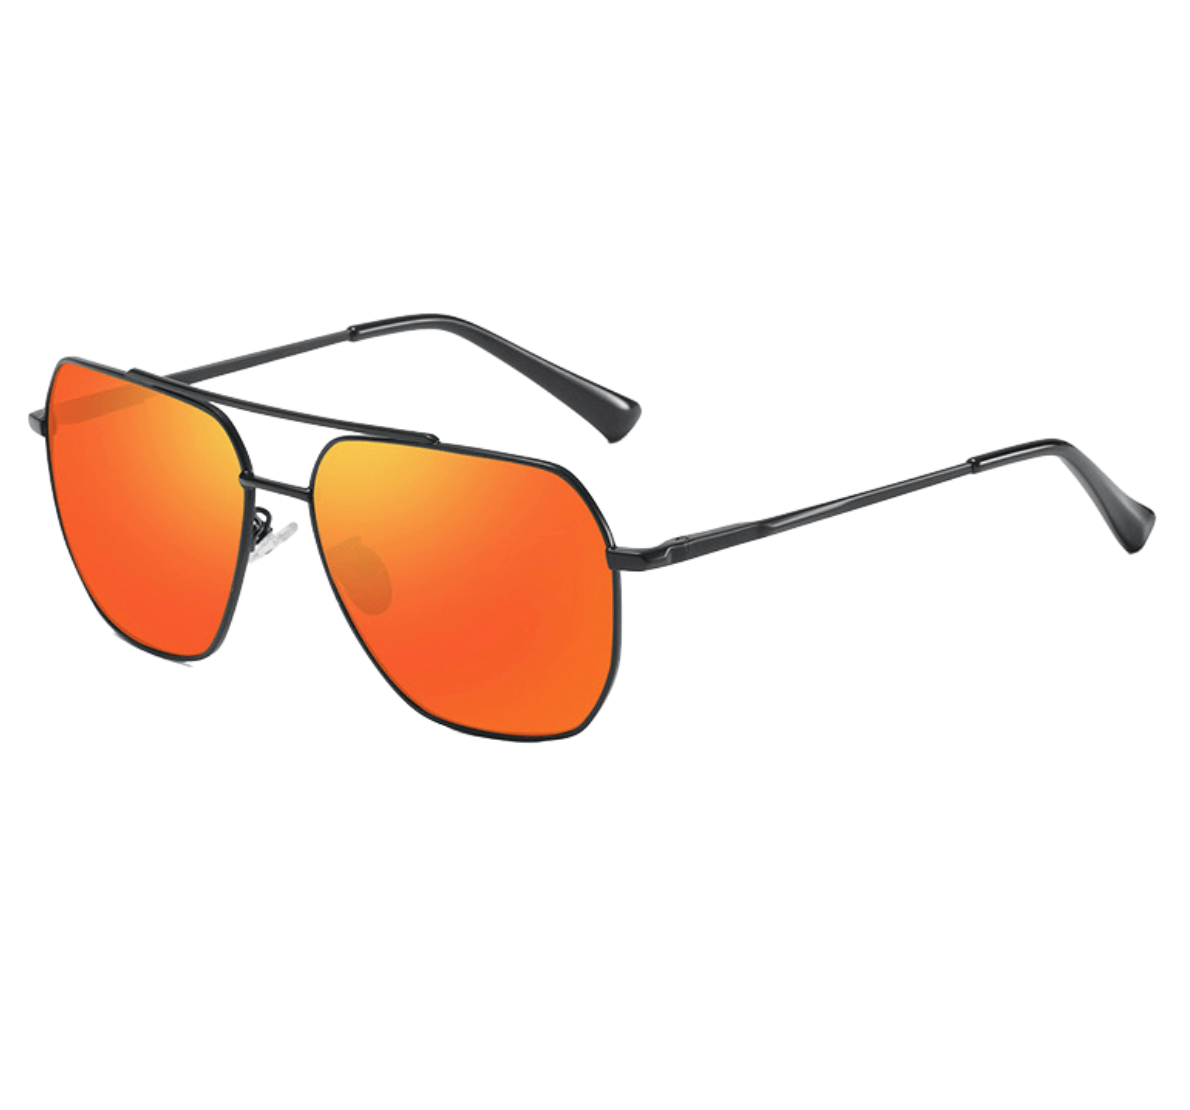 Wholesale coloured aviator sunglasses, Wholesale Aviator Sunglasses, Sunglasses Manufacturer in China, sunglasses vendor wholesale, sunglasses factory